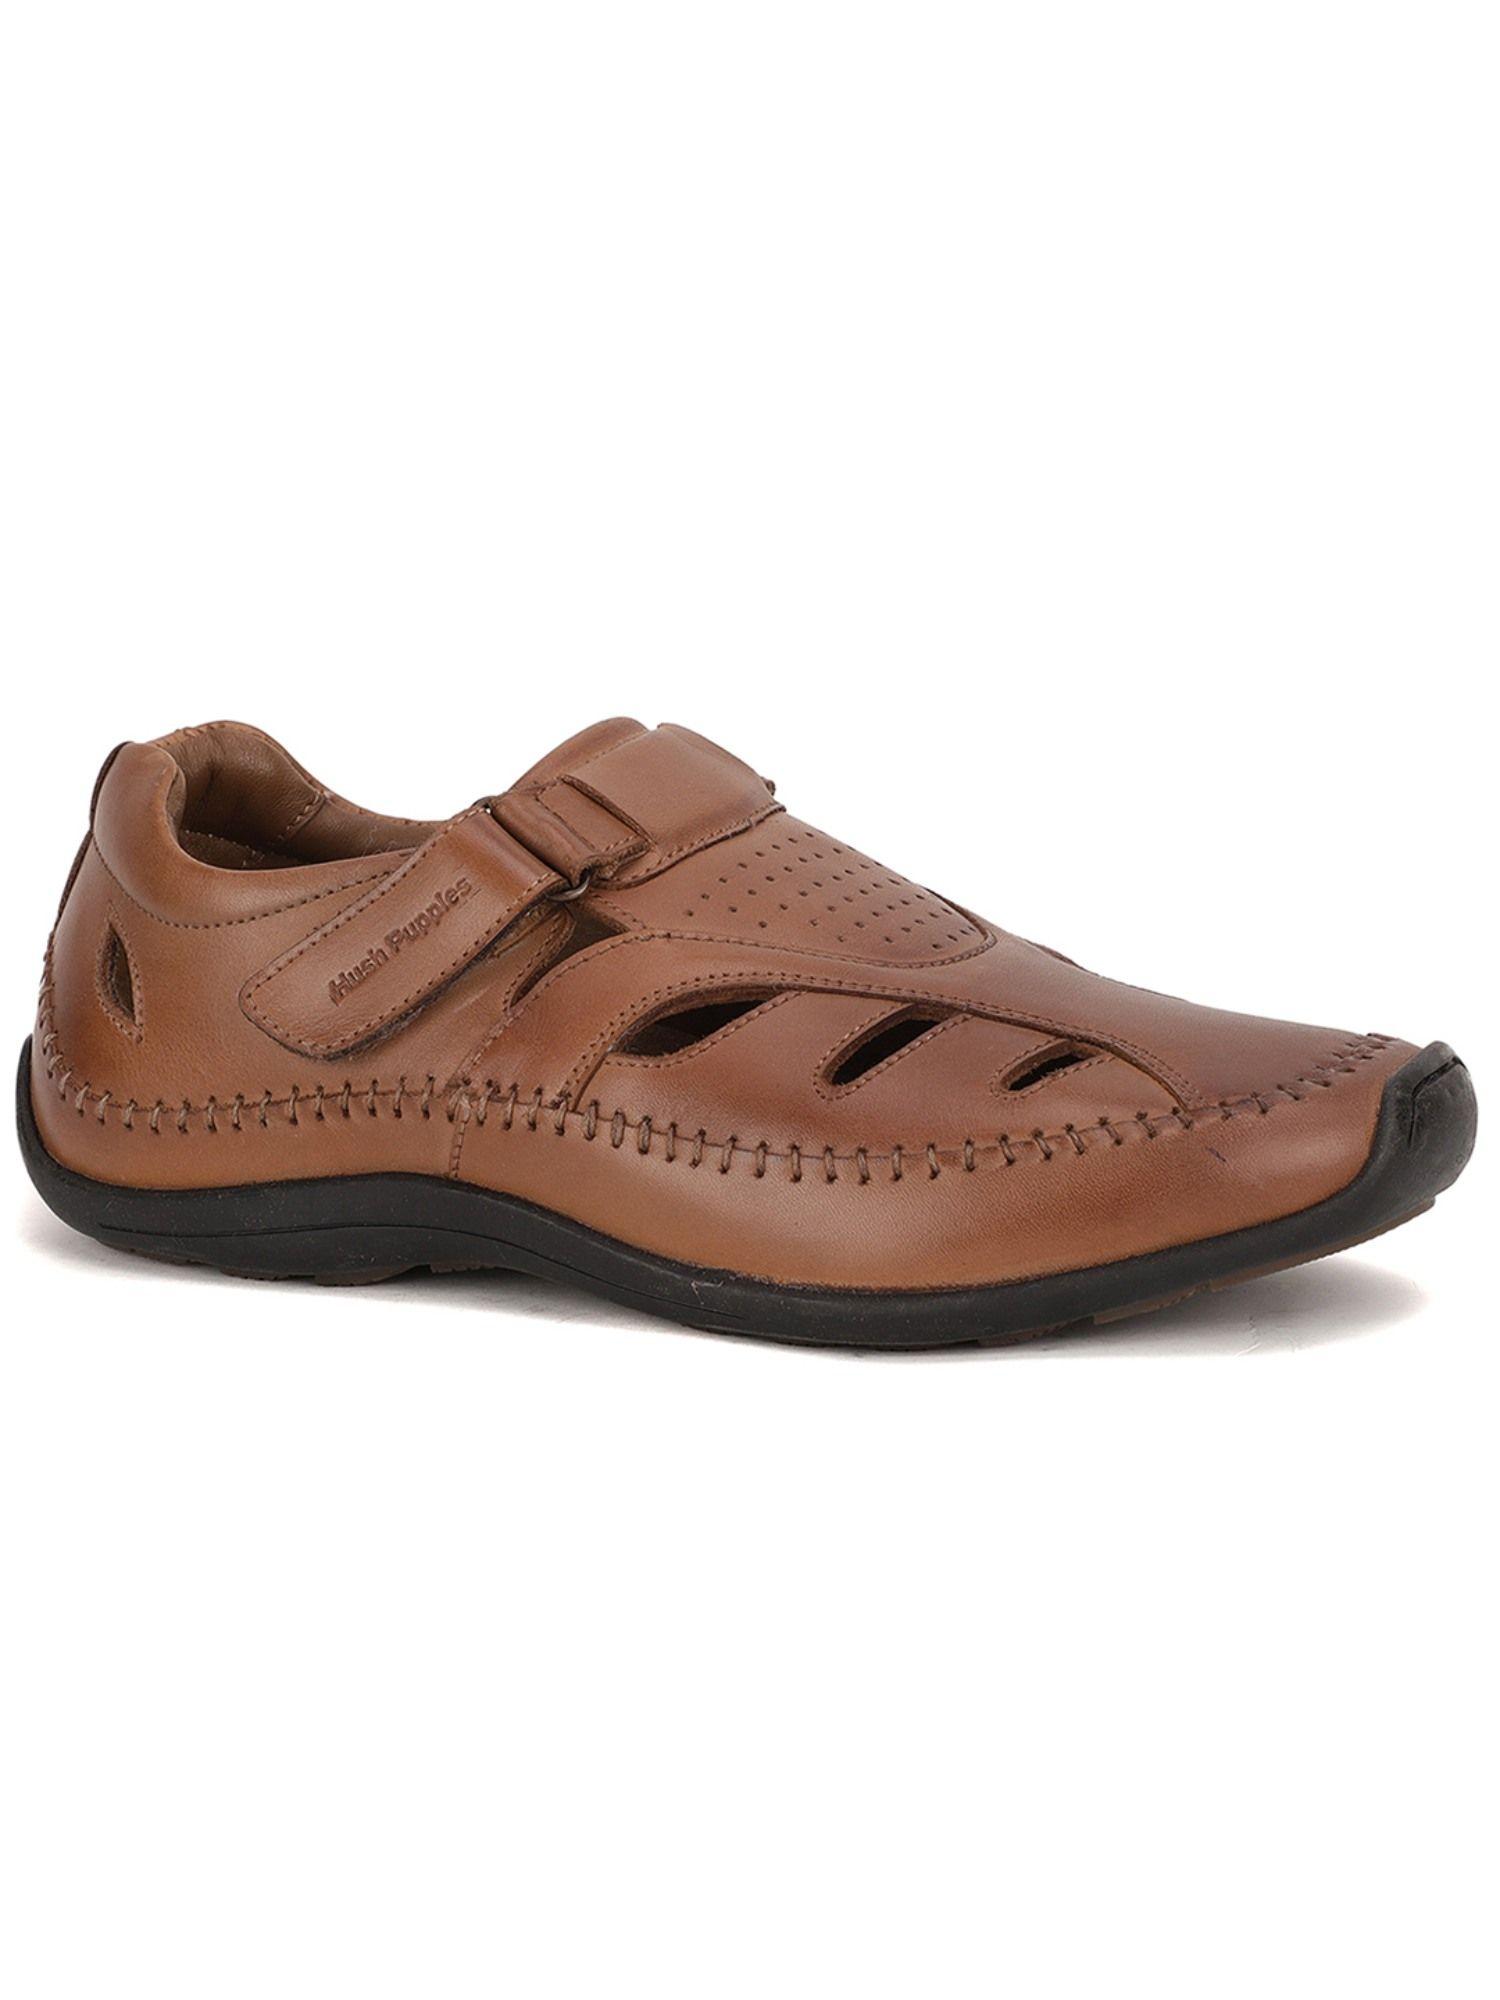 men-tan-velcro-sandals